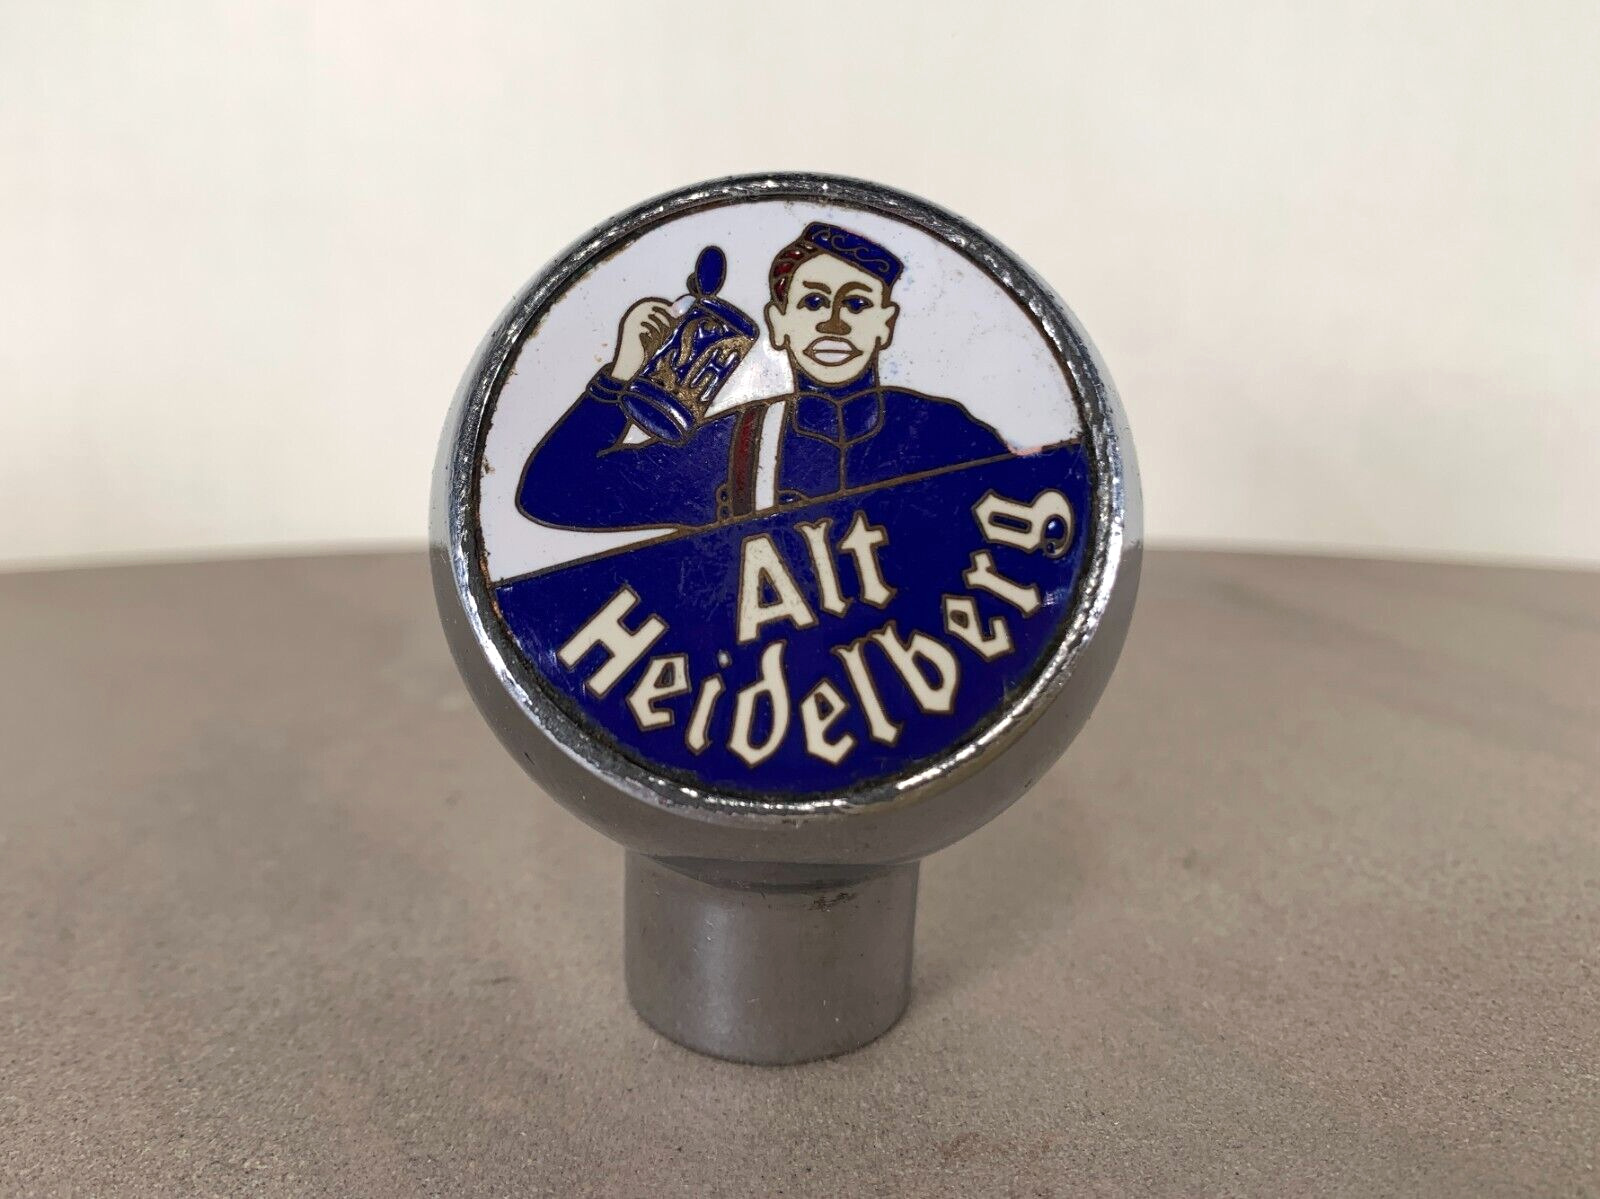 Antique Alt Heidelberg Beer Tap Handle, Chrome/ Porcelain Ball  30s - 40s